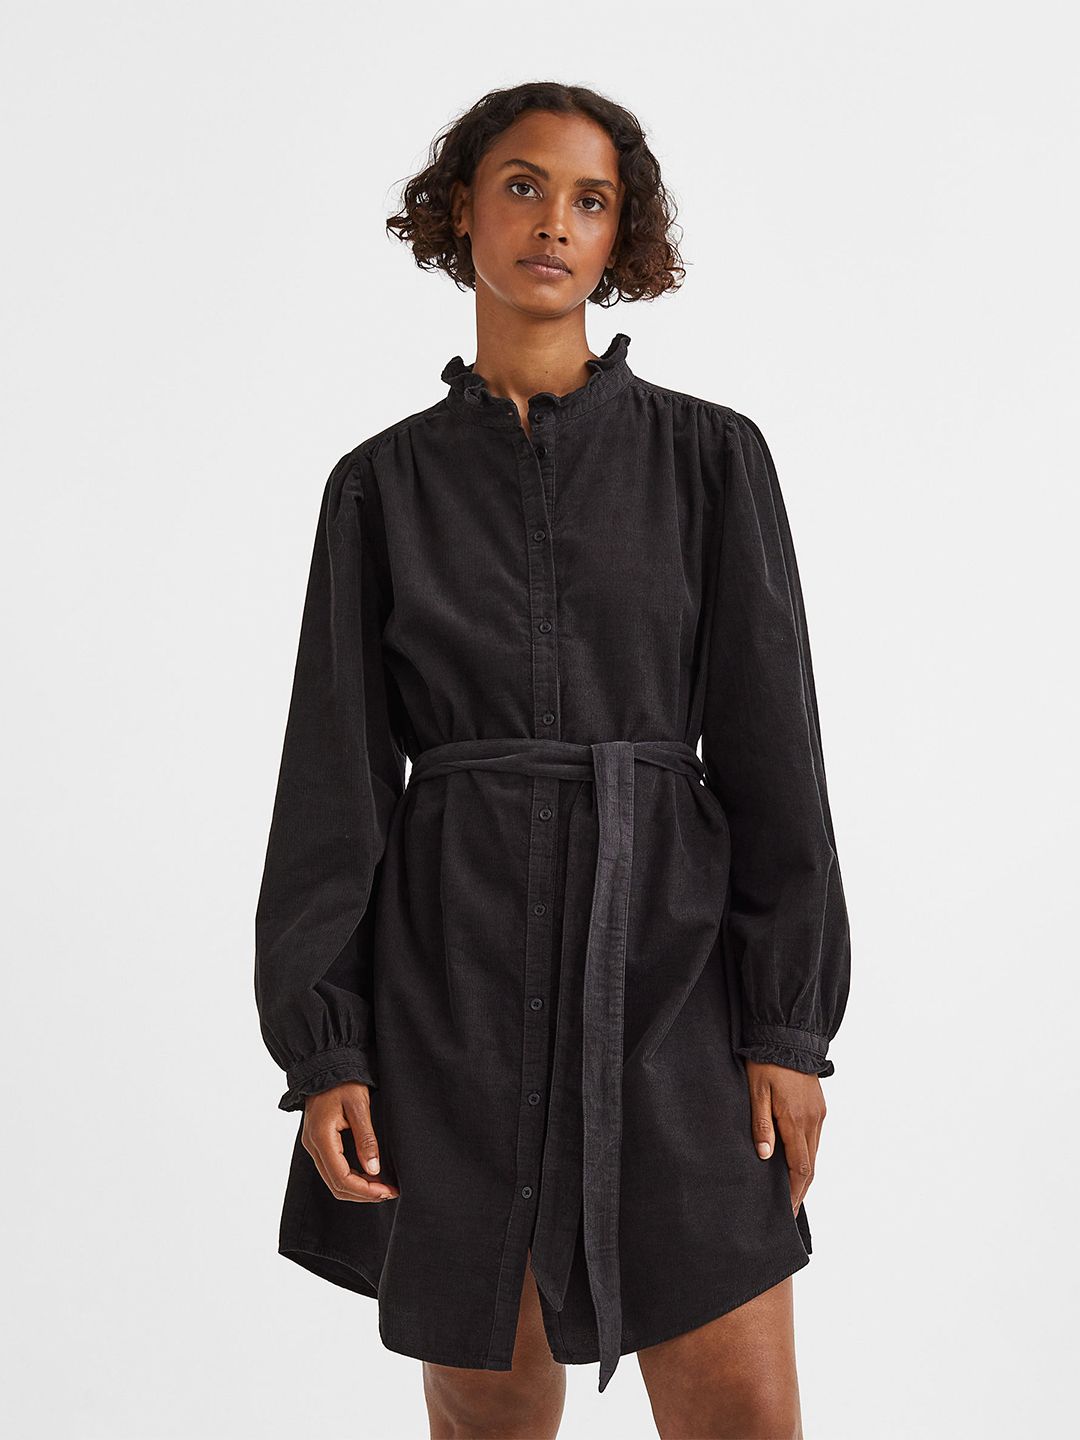 H&M Woman Black Corduroy Dress Price in India